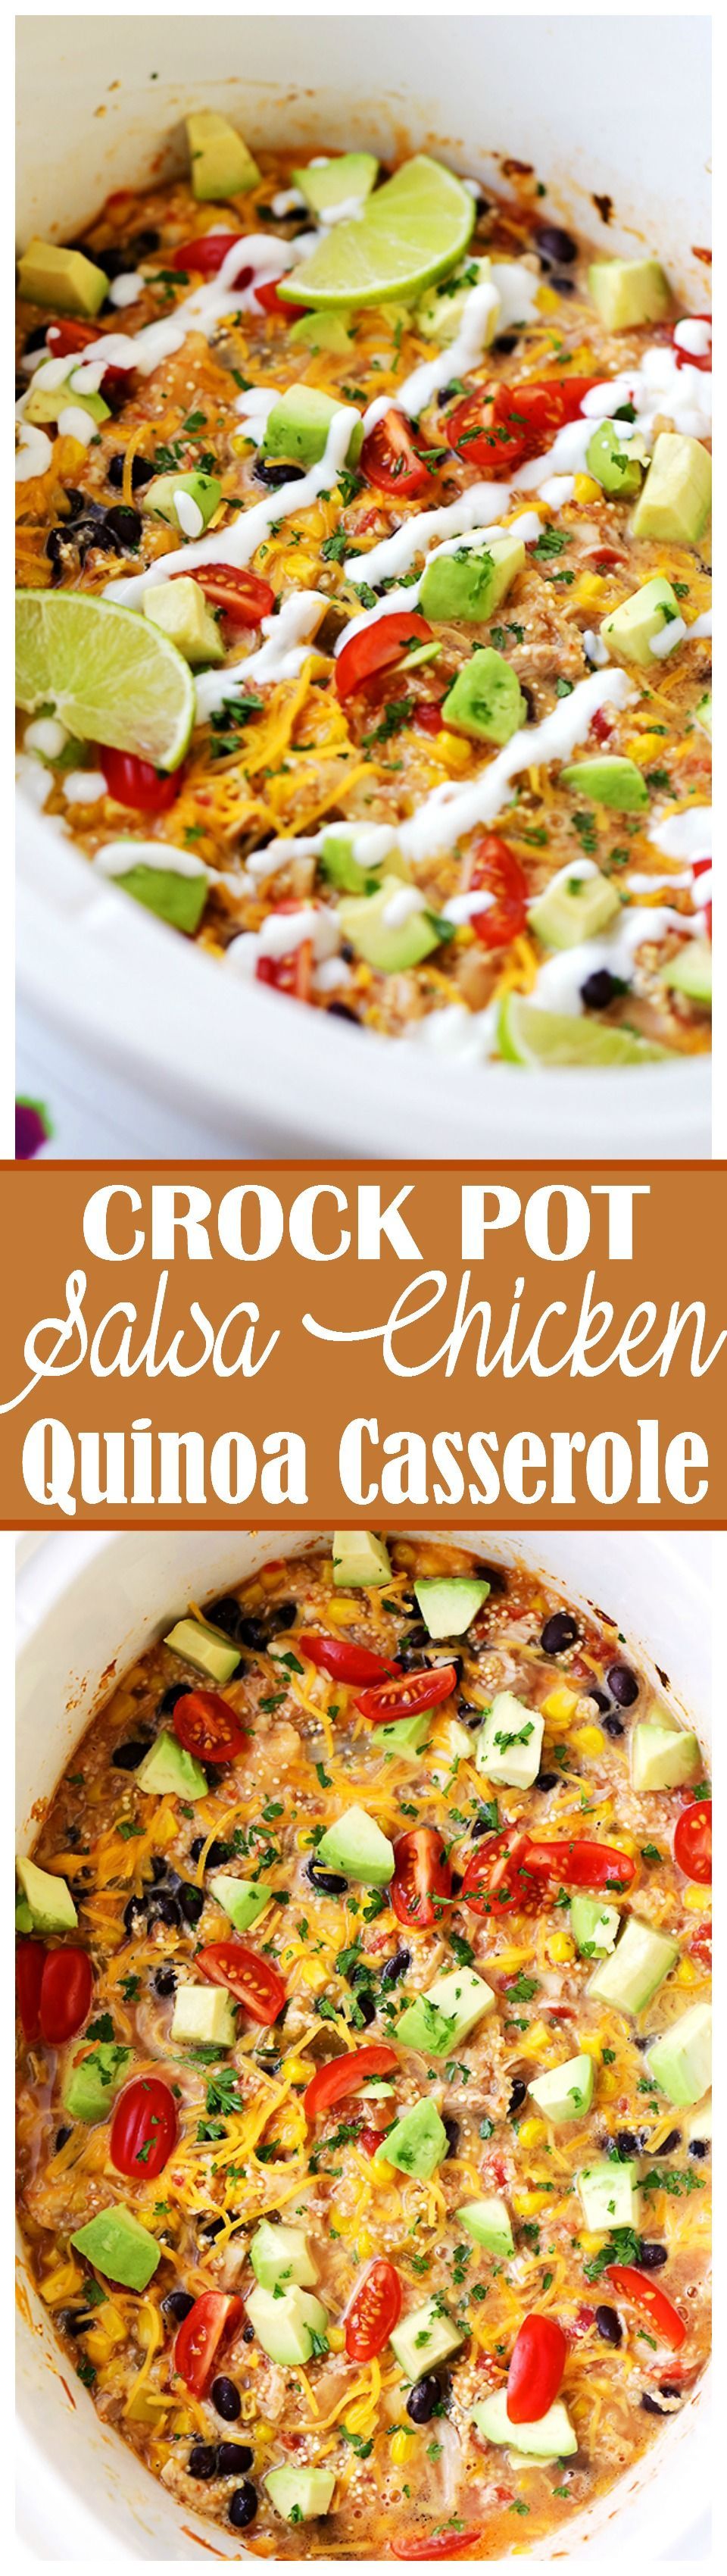 Crock Pot Salsa Chicken Quinoa Casserole Recipe – Packed with quinoa, chicken, veggies, and salsa, this is